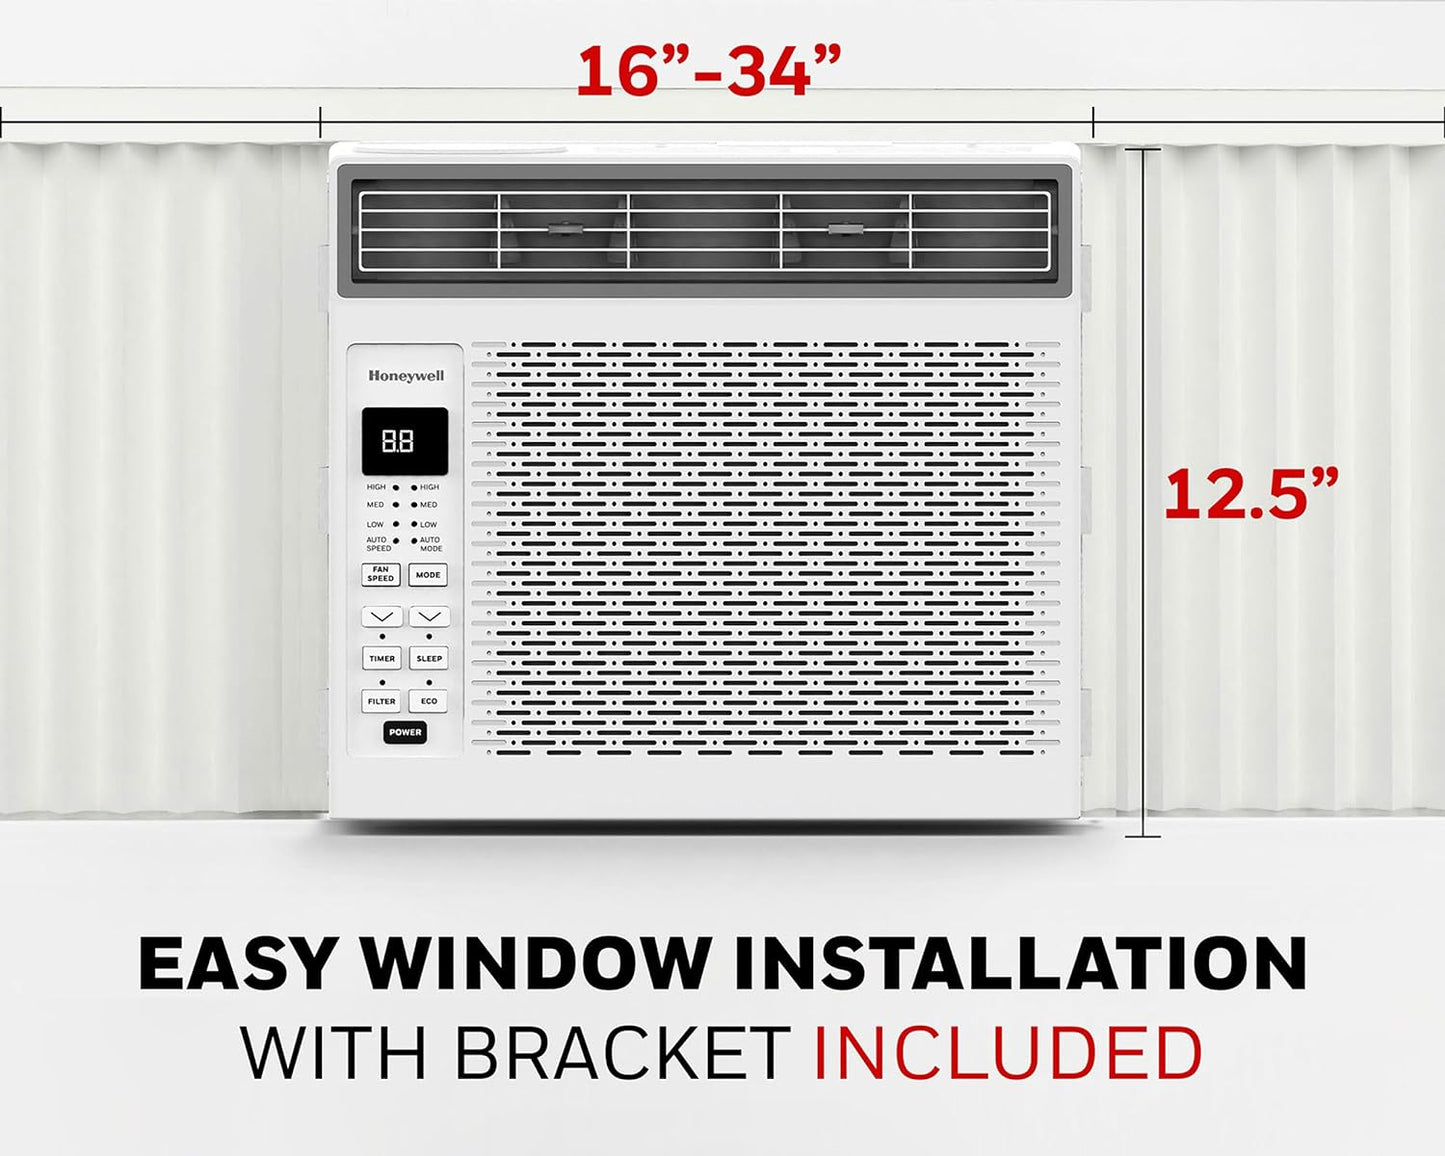 6000 BTU Window Air Conditioner